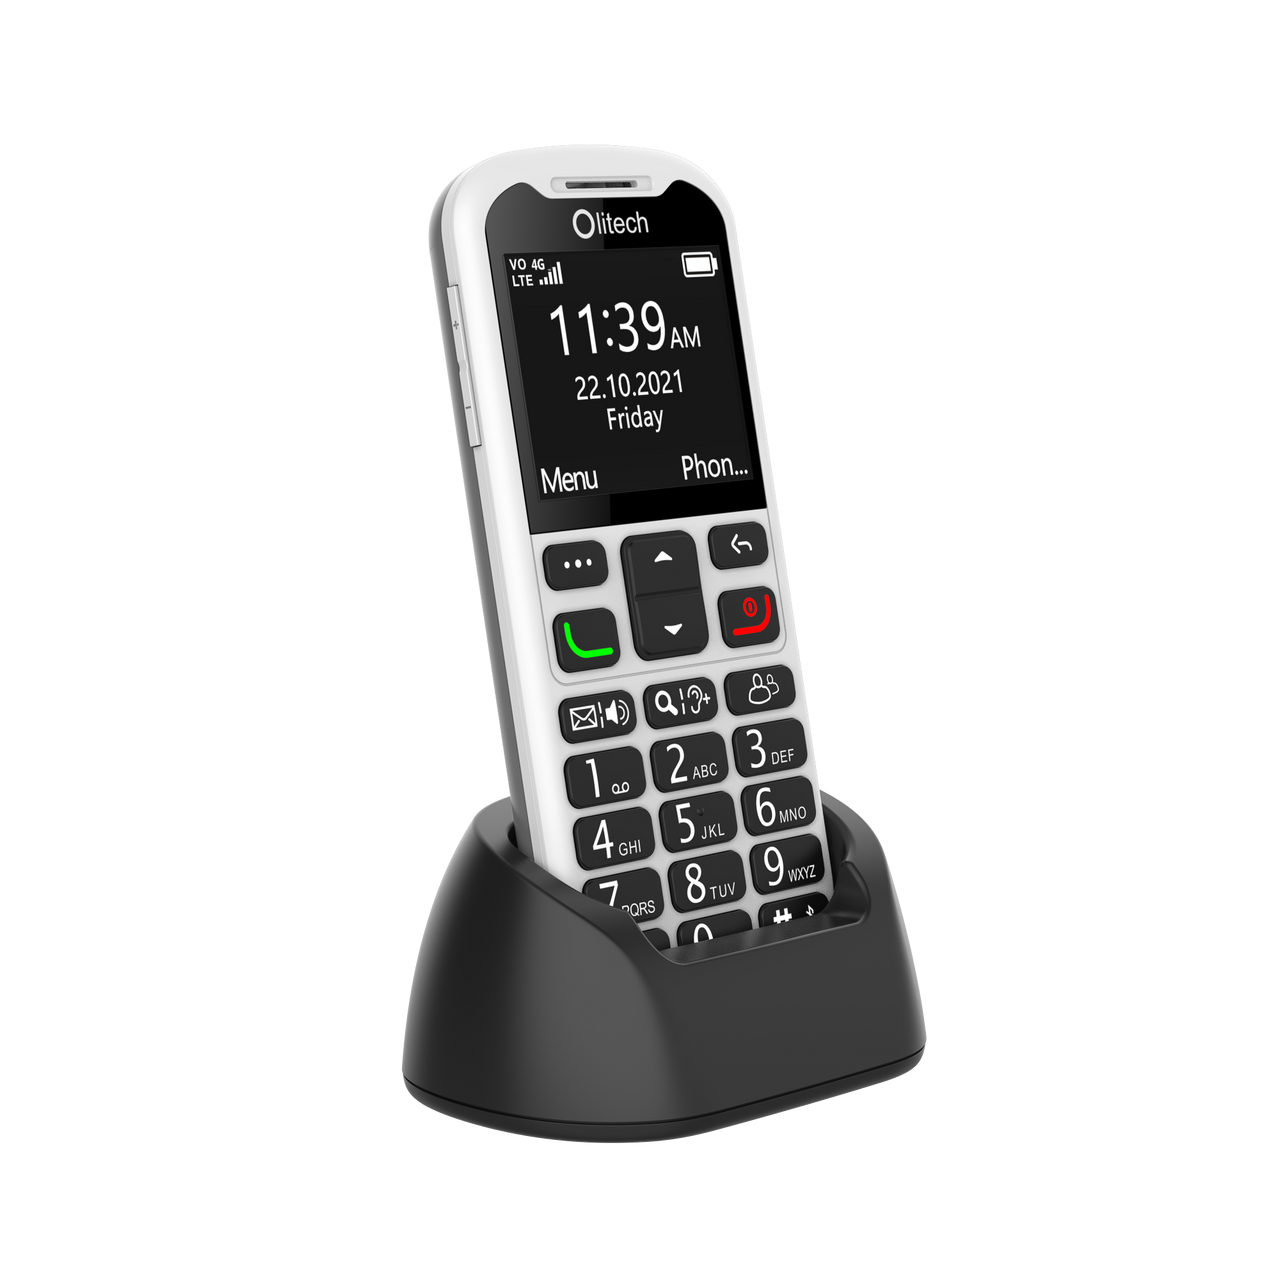 Olitech EasyMate2 Seniors 4G Phone Big Buttons GPS Location - Black/White